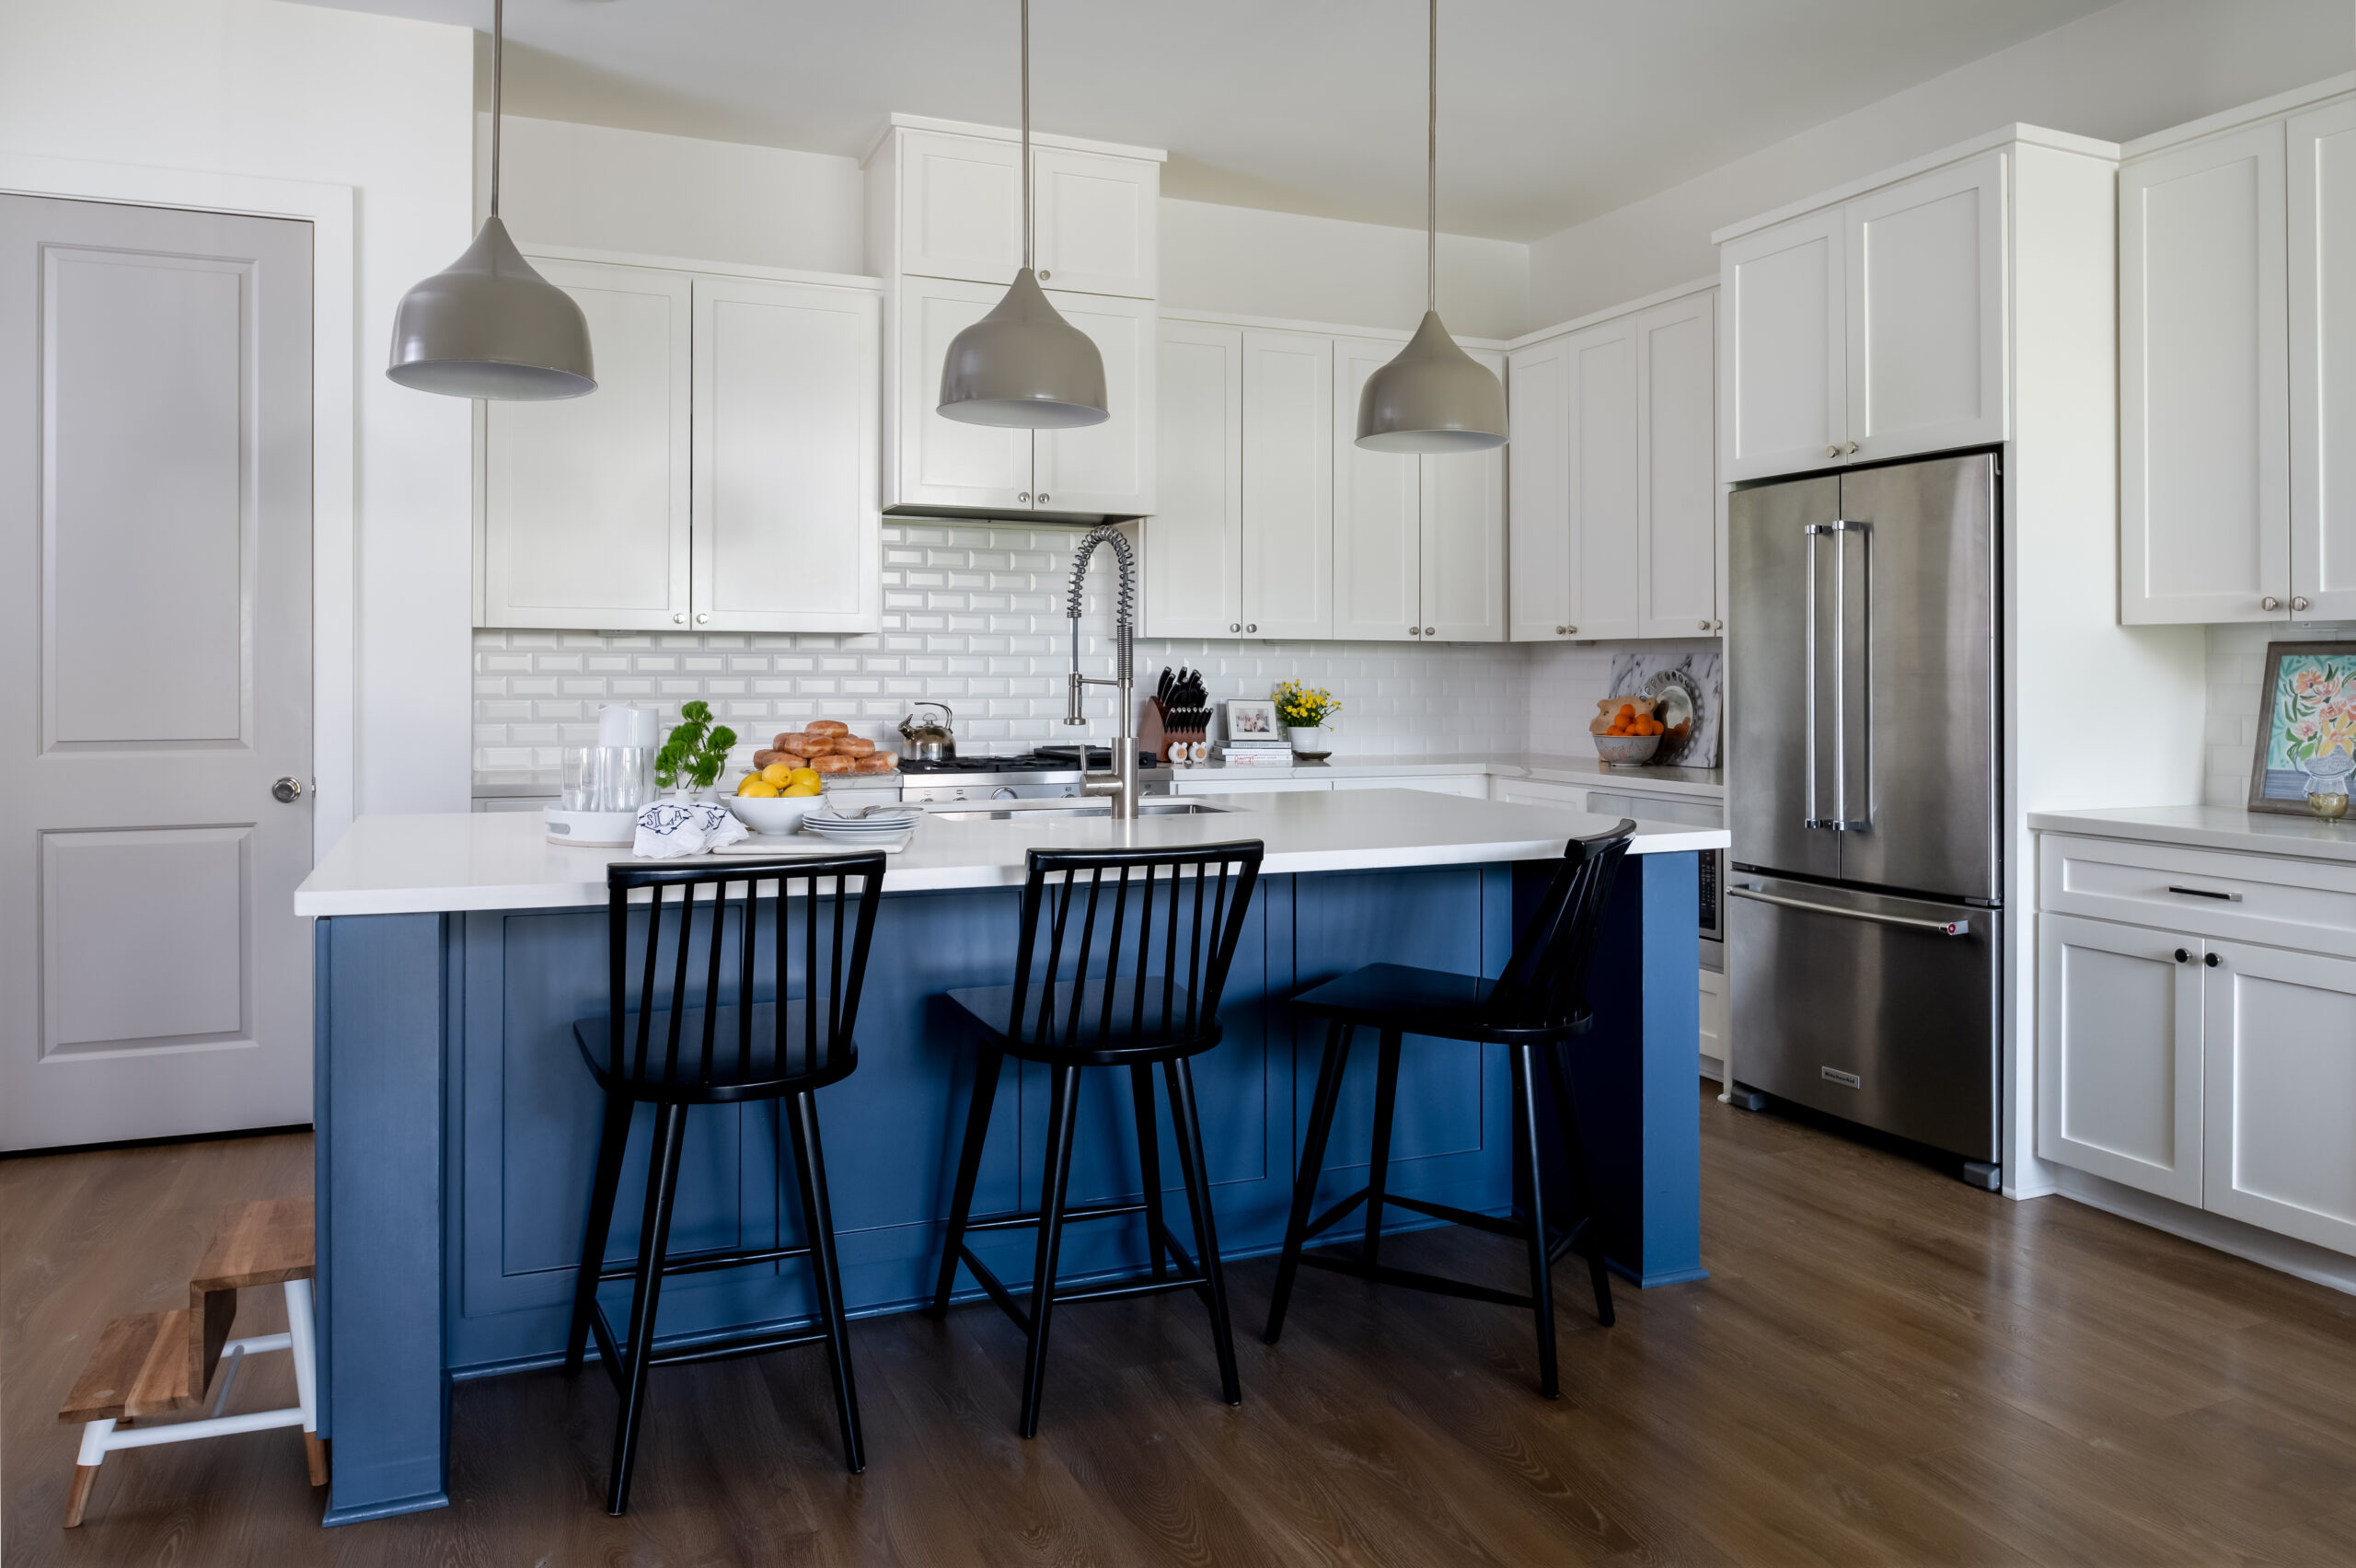 Luxury and modern kitchen interior design with blue and white kitchen island